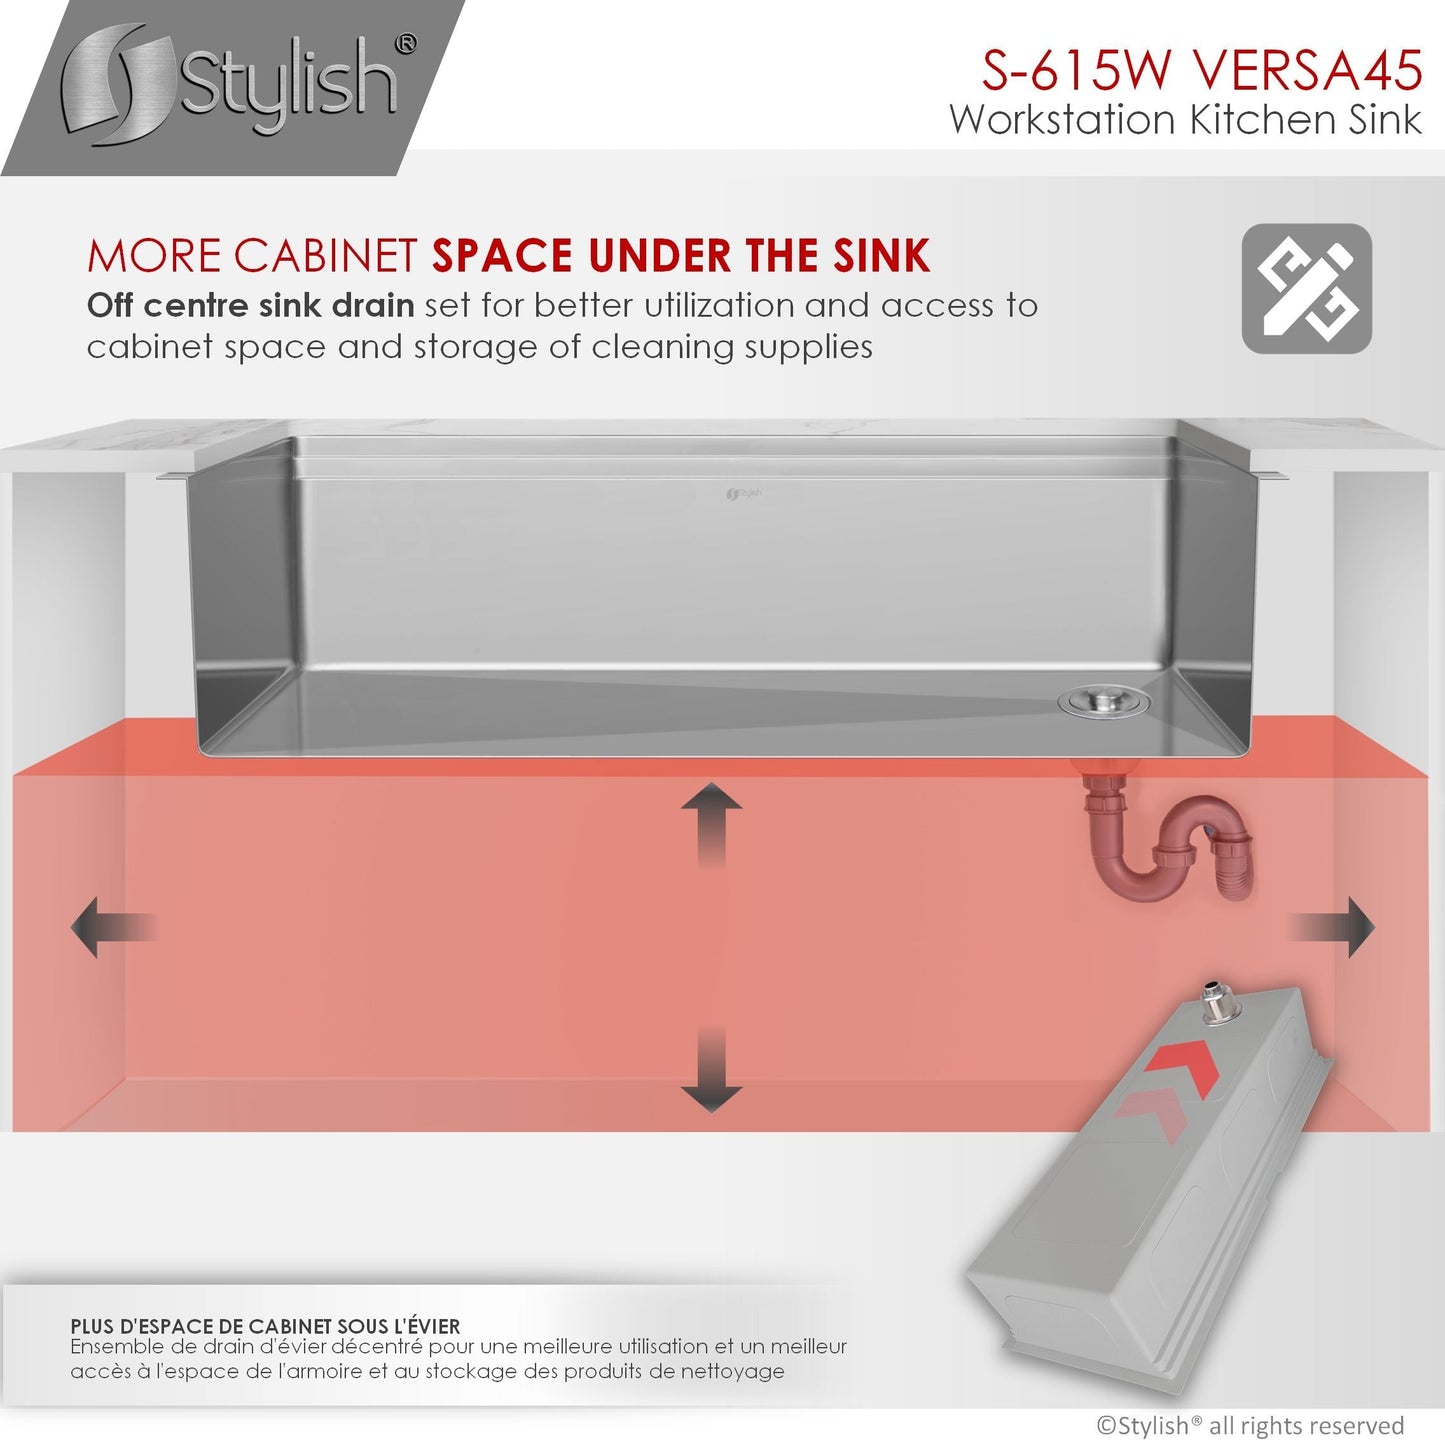 Stylish Versa45 45" x 19" Ledge Workstation Single Bowl Undermount 16 Gauge Stainless Steel Kitchen Sink with Built in Accessories S-615W